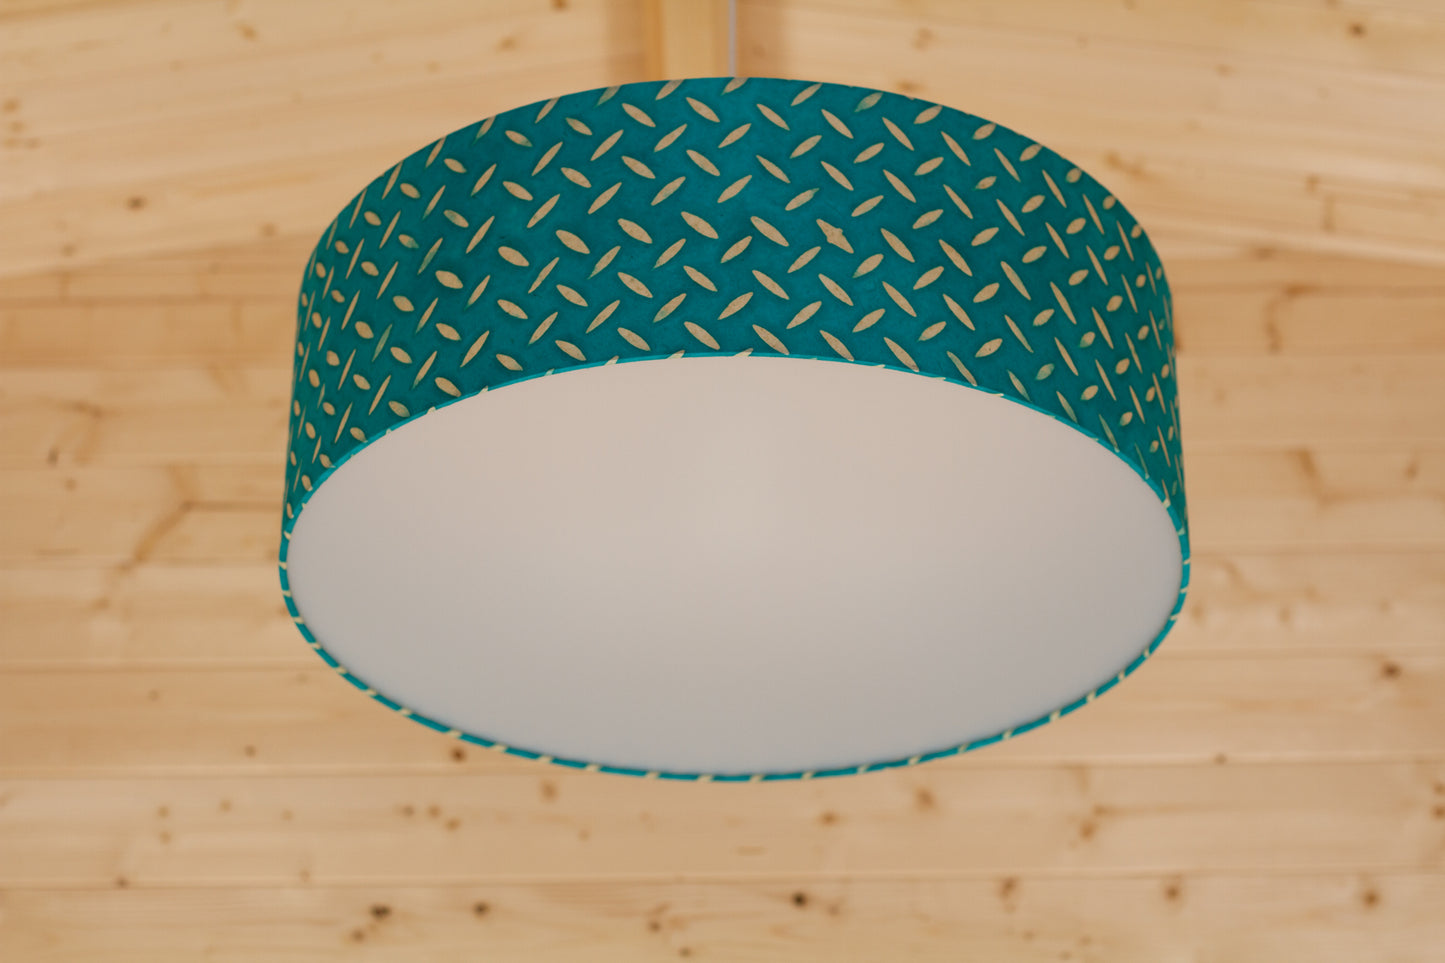 Drum Lamp Shade - P15 - Batik Tread Plate Mint Green, 60cm(d) x 20cm(h)